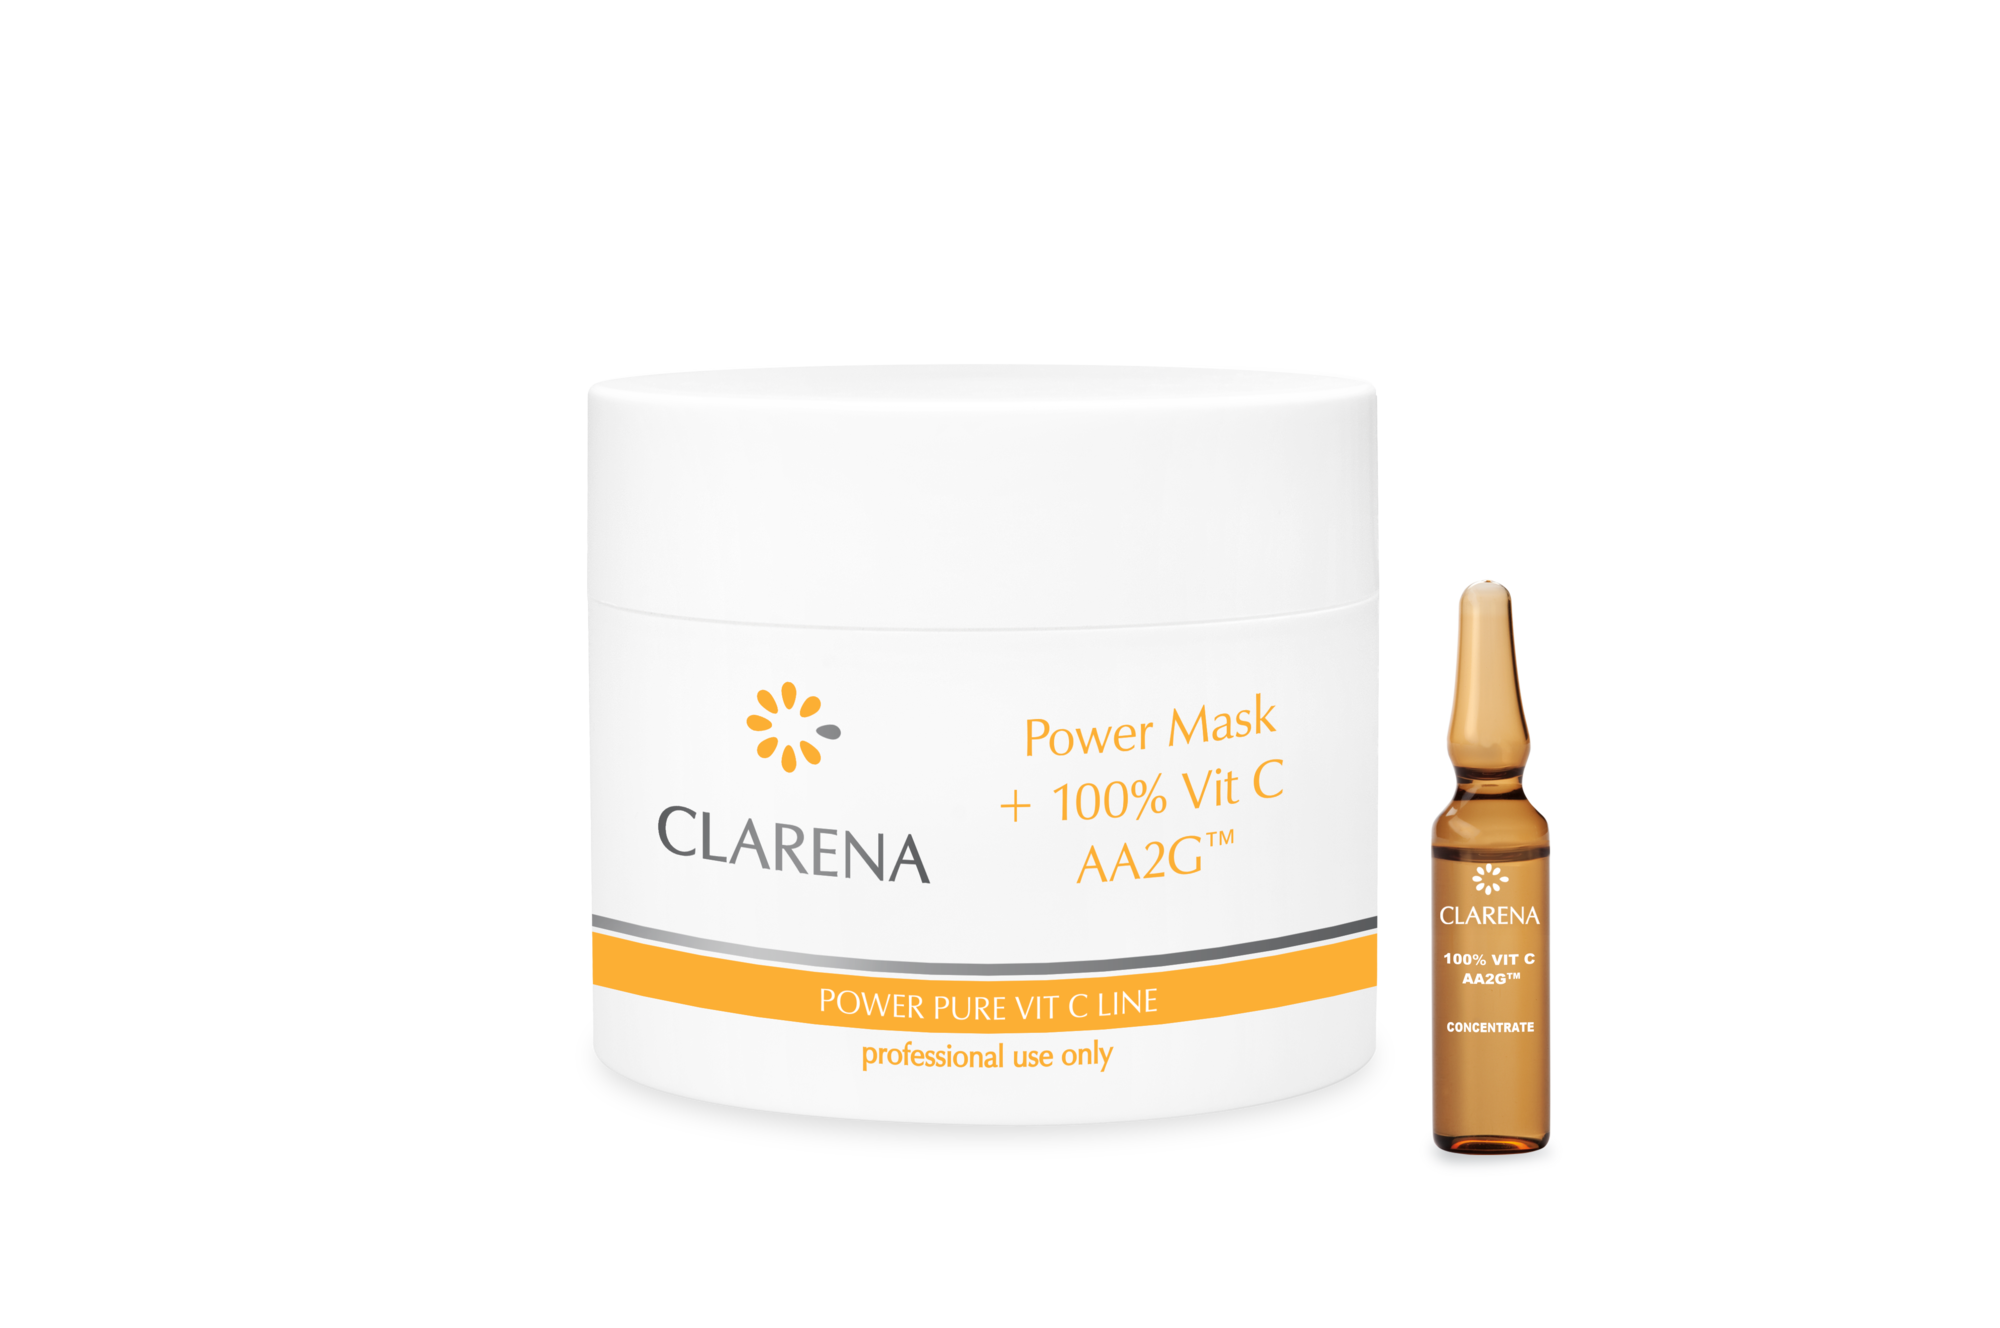 Power Mask + 100% Vit C AA2G™ / Маска со 100% активным витамином С